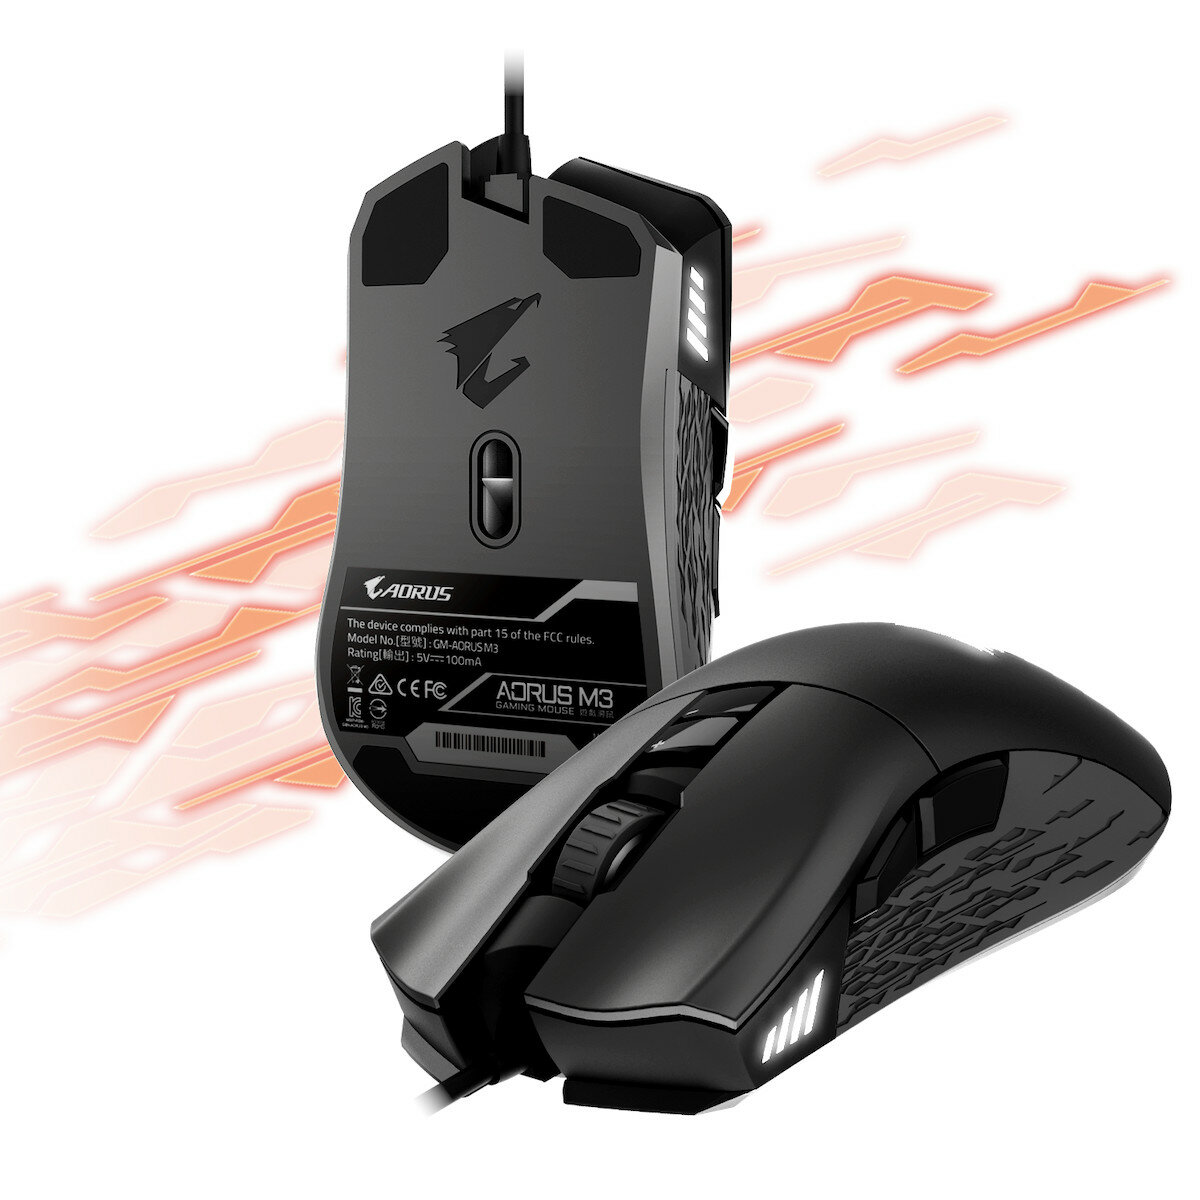  Mysz Gigabyte AORUS M3 Gaming USB dwie myszy